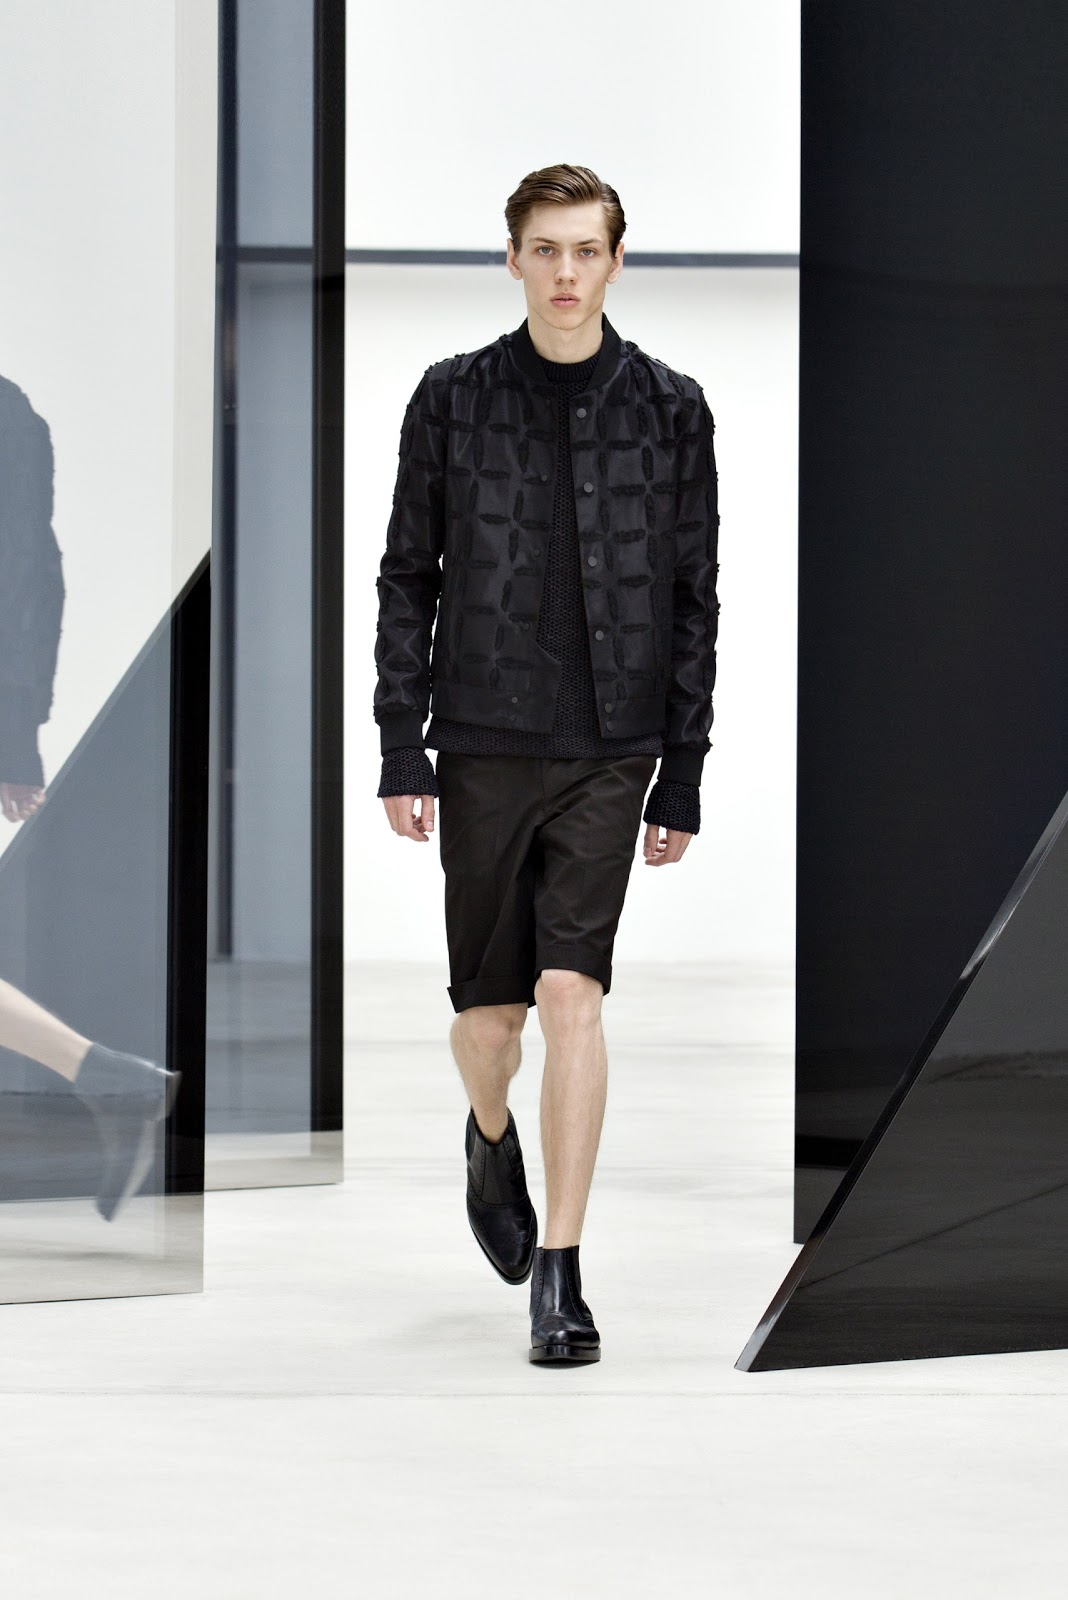 Louis Vuitton, Lanvin, Marc Jacobs: Big Hips On The Runway